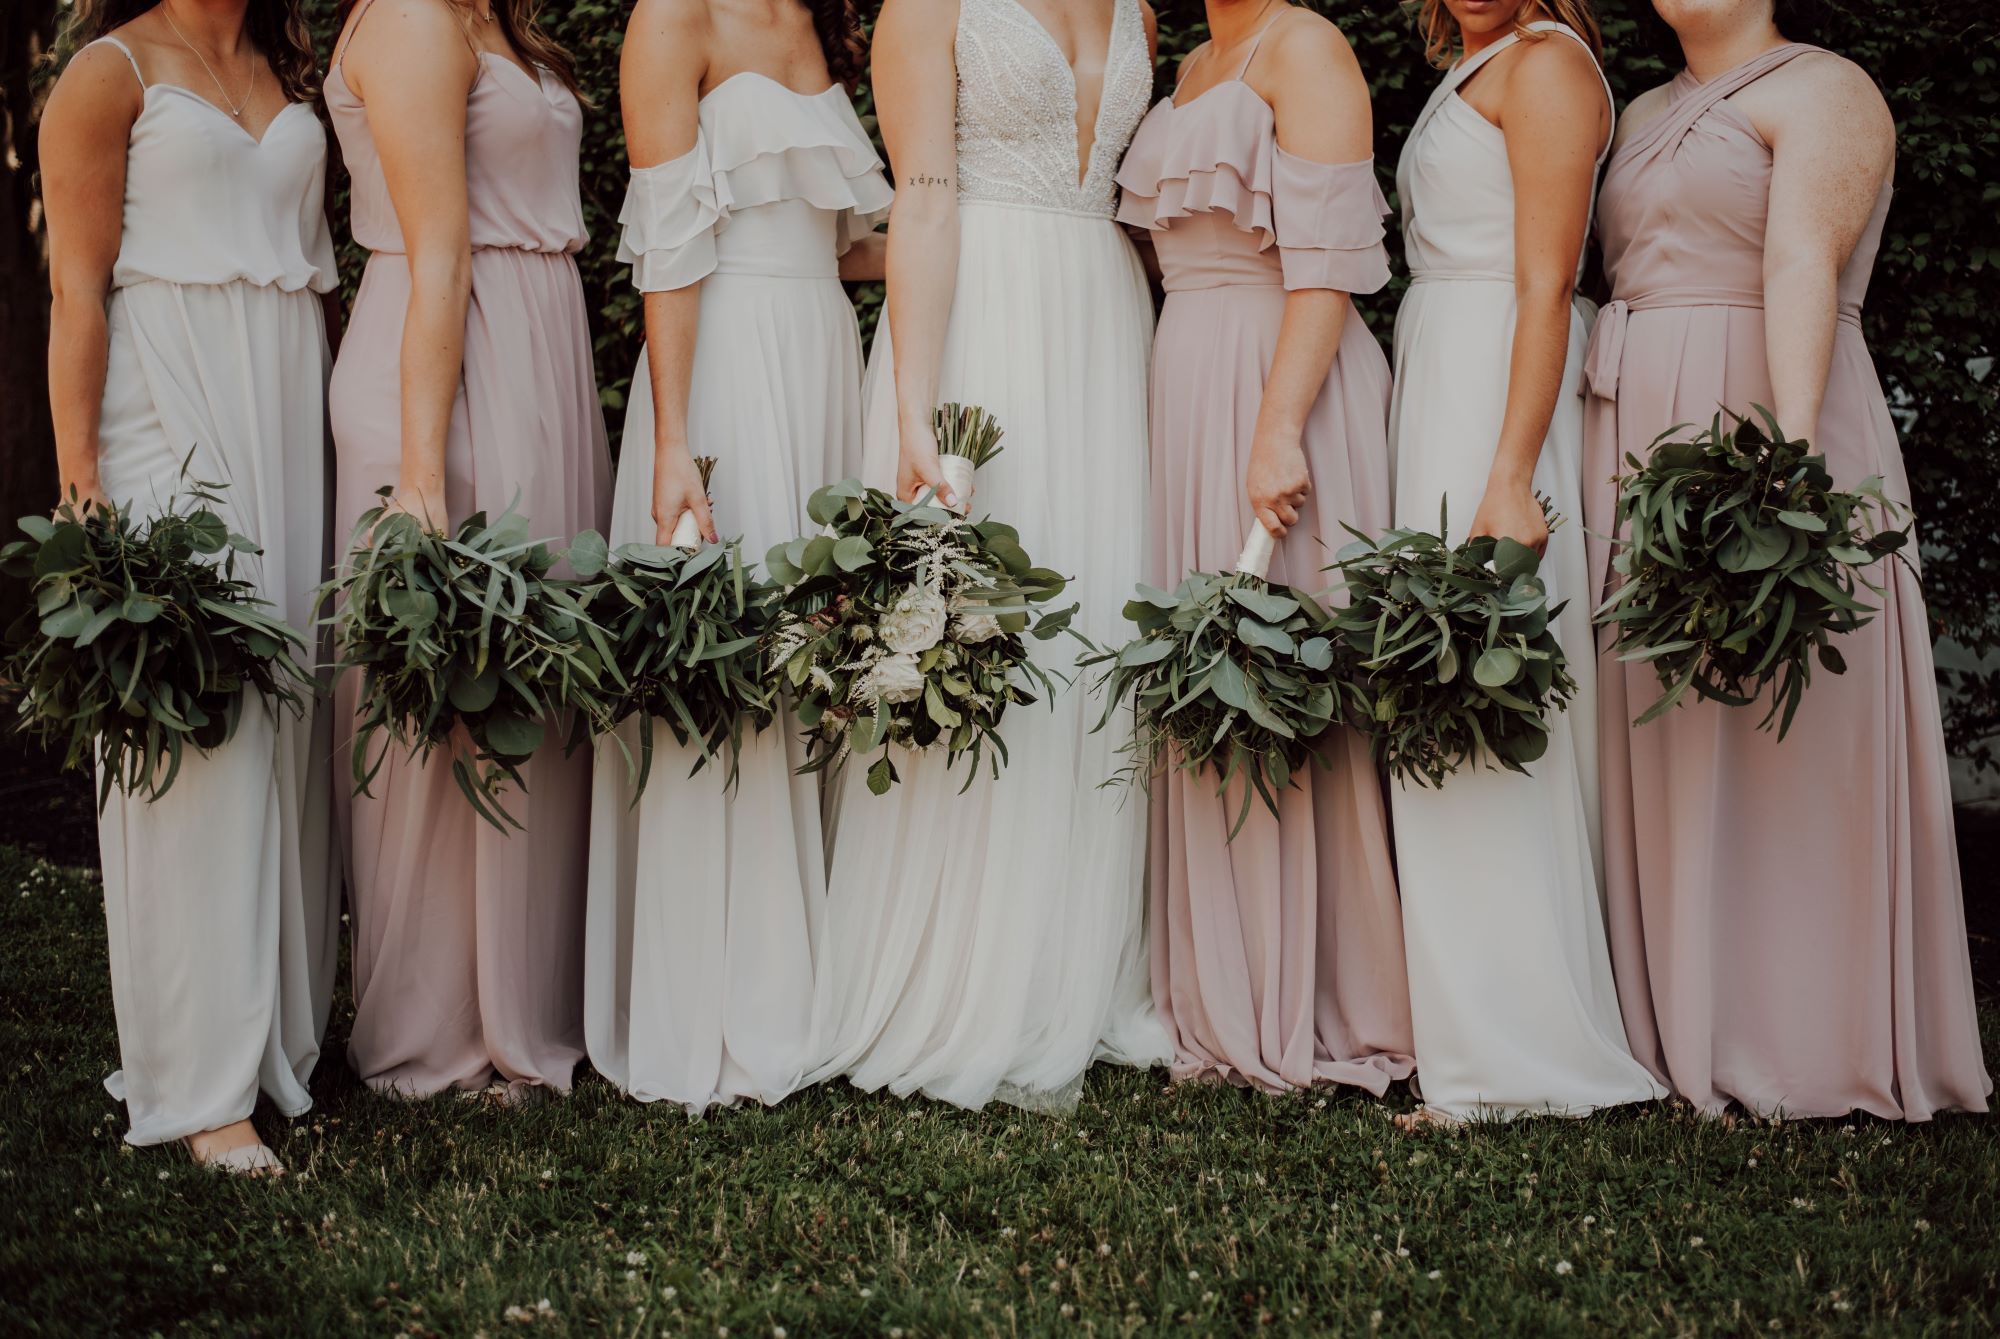 Personalized Wedding Party Adult Flip Flops - Team Bride